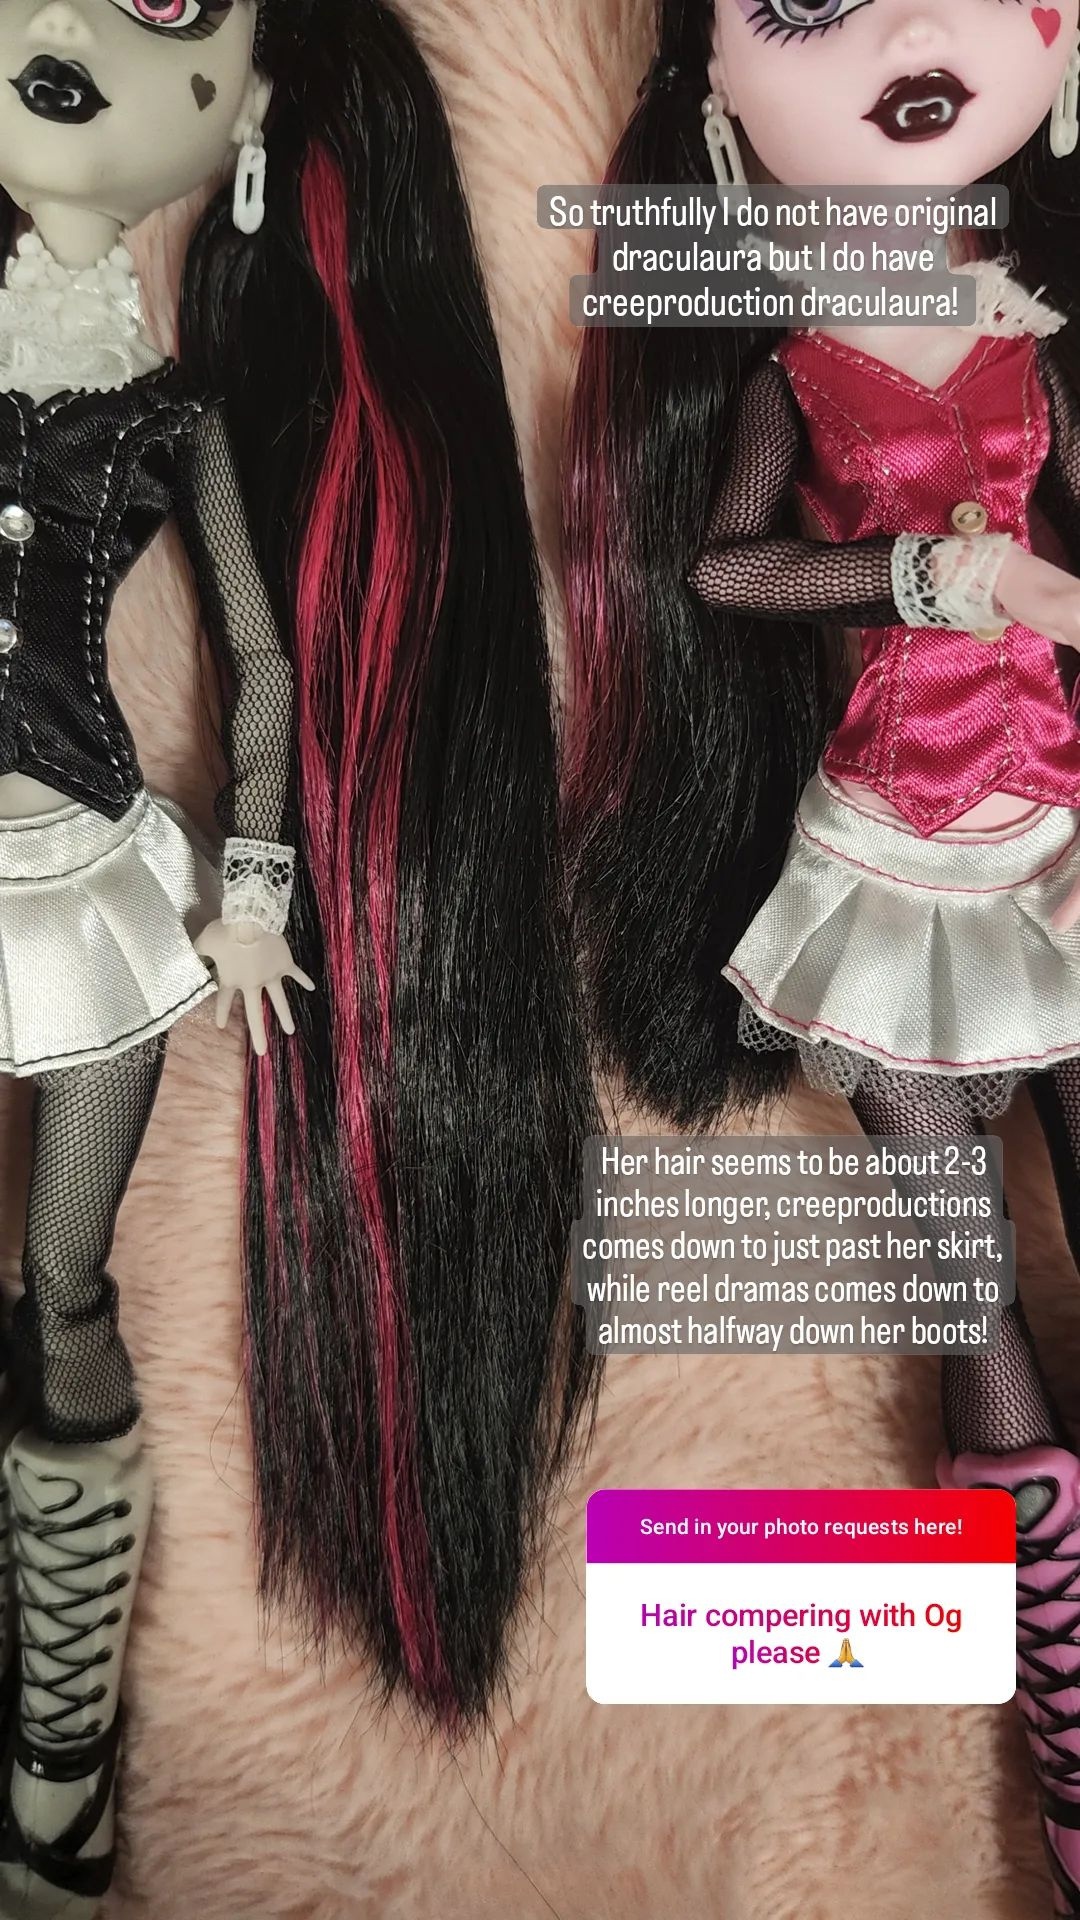 Monster High Reel Drama Draculaura Doll